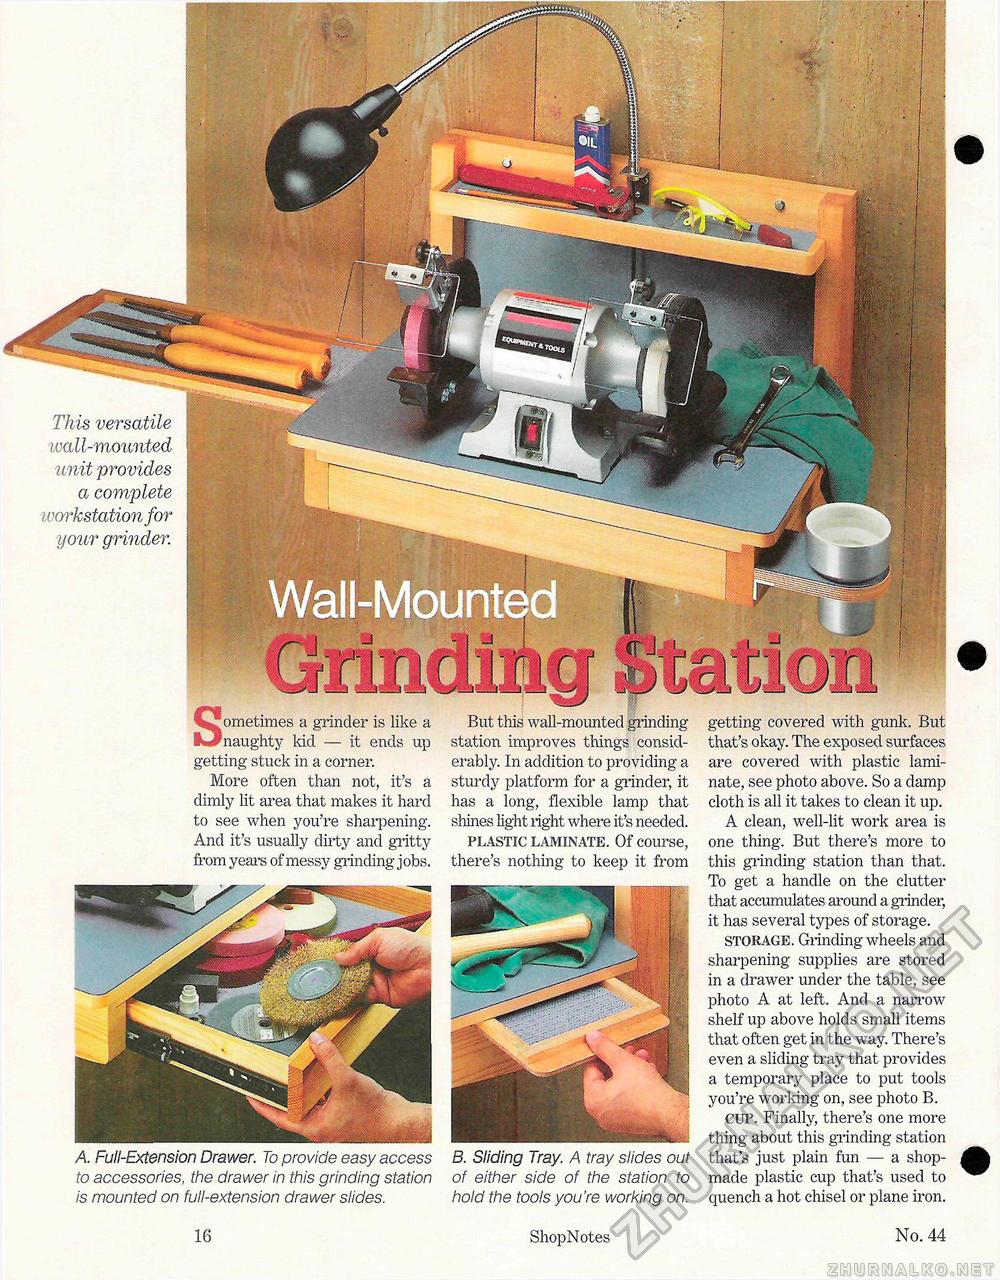 44 - Grinding Station,  16